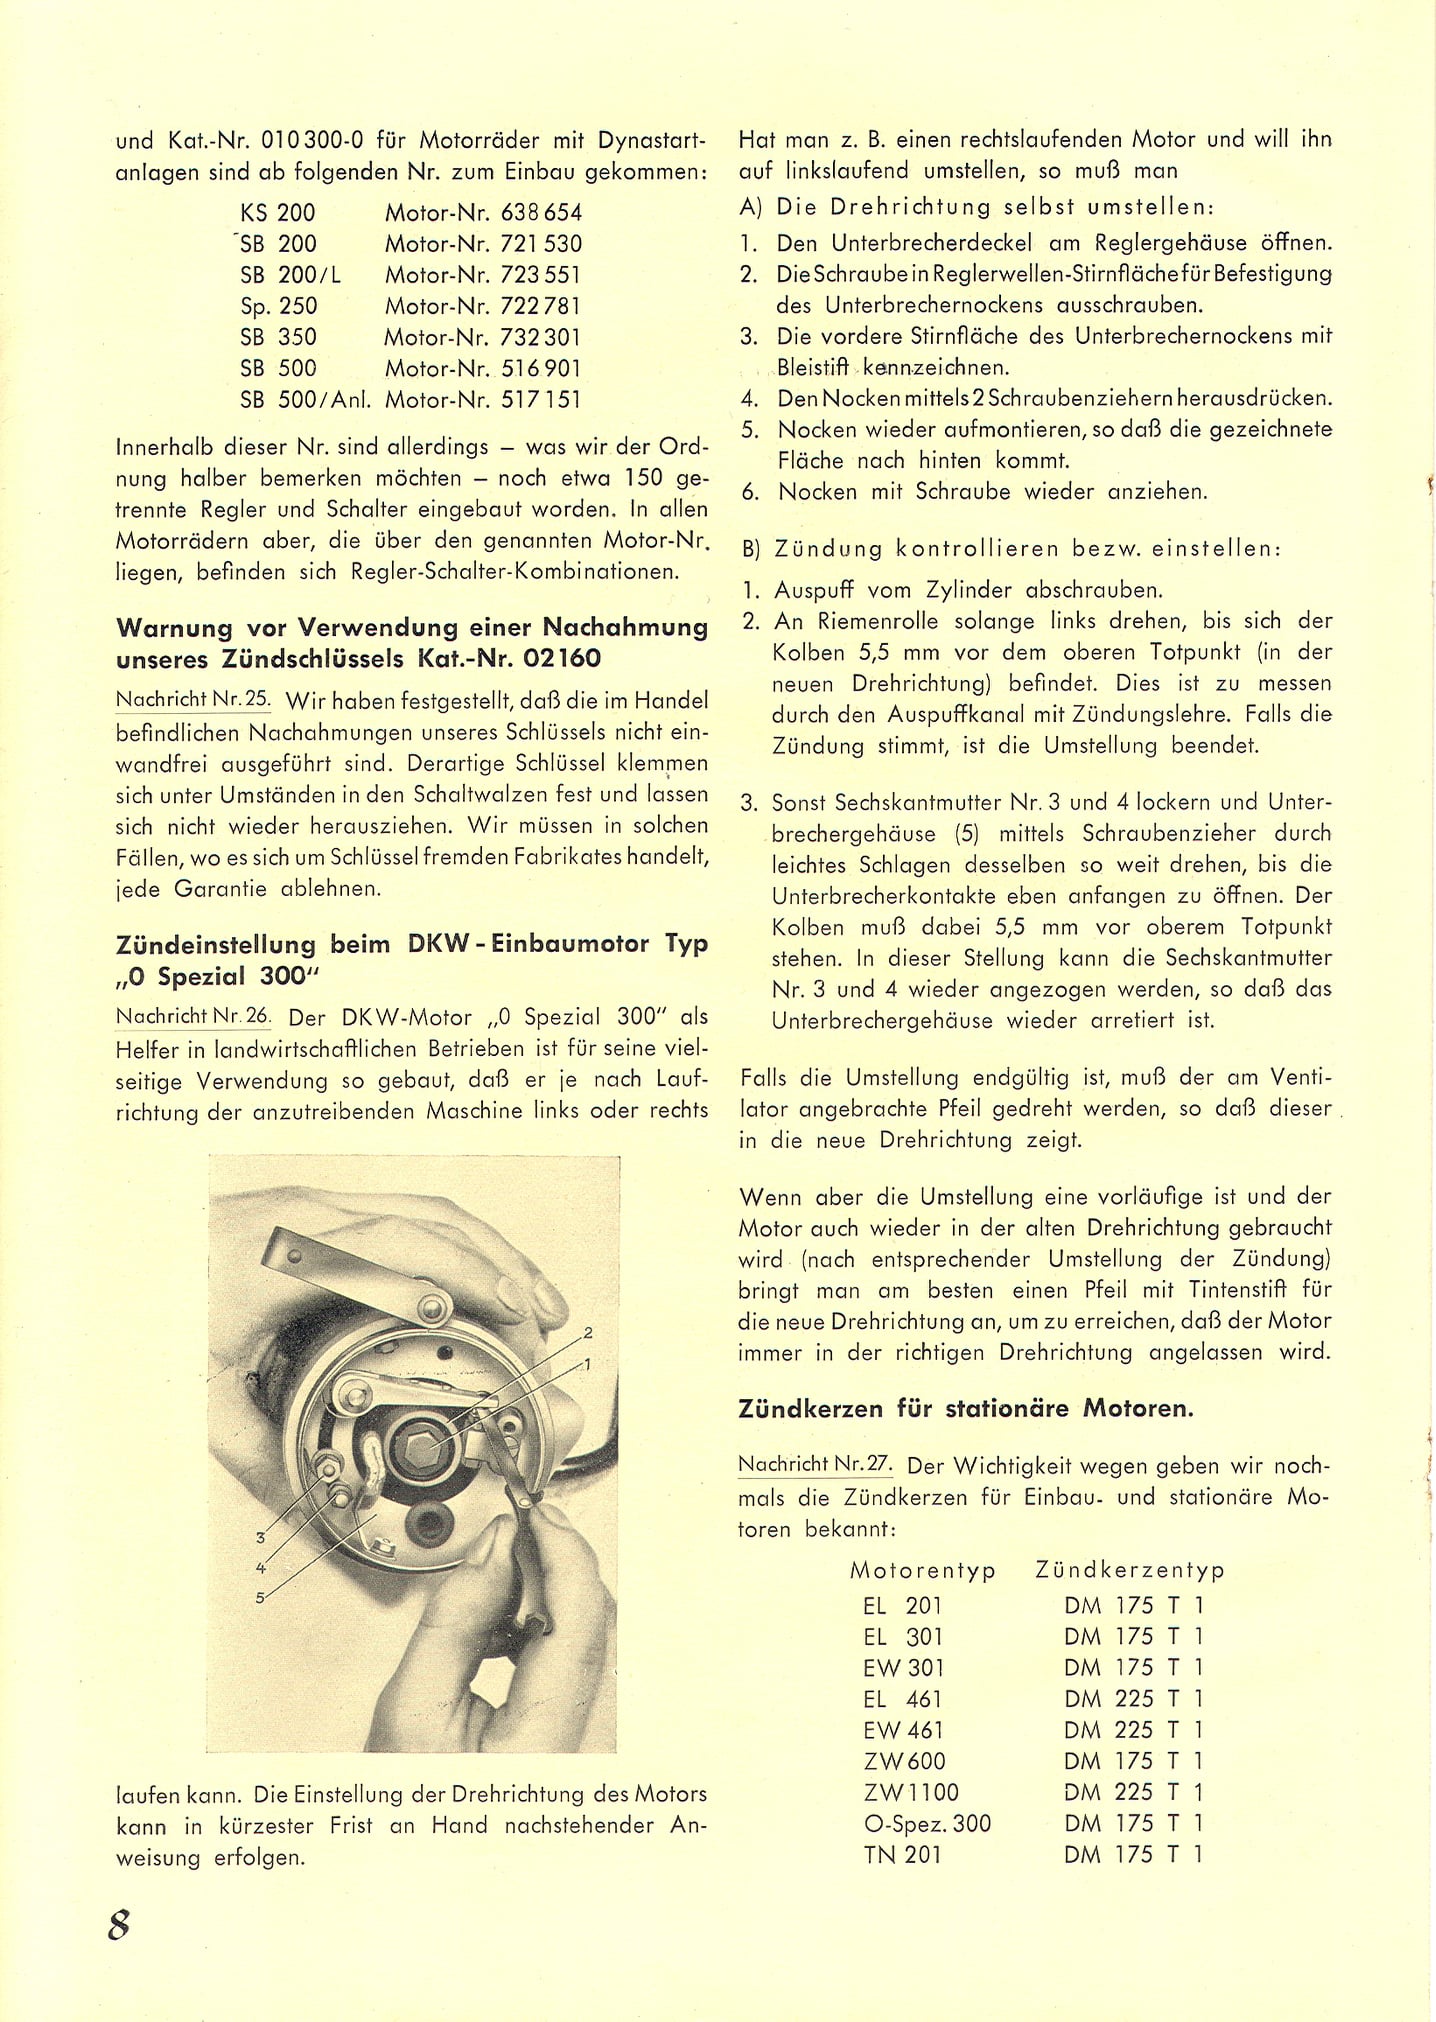 DKW Auto-Union Project: 1938 DKW ElectroDienst Volume Three